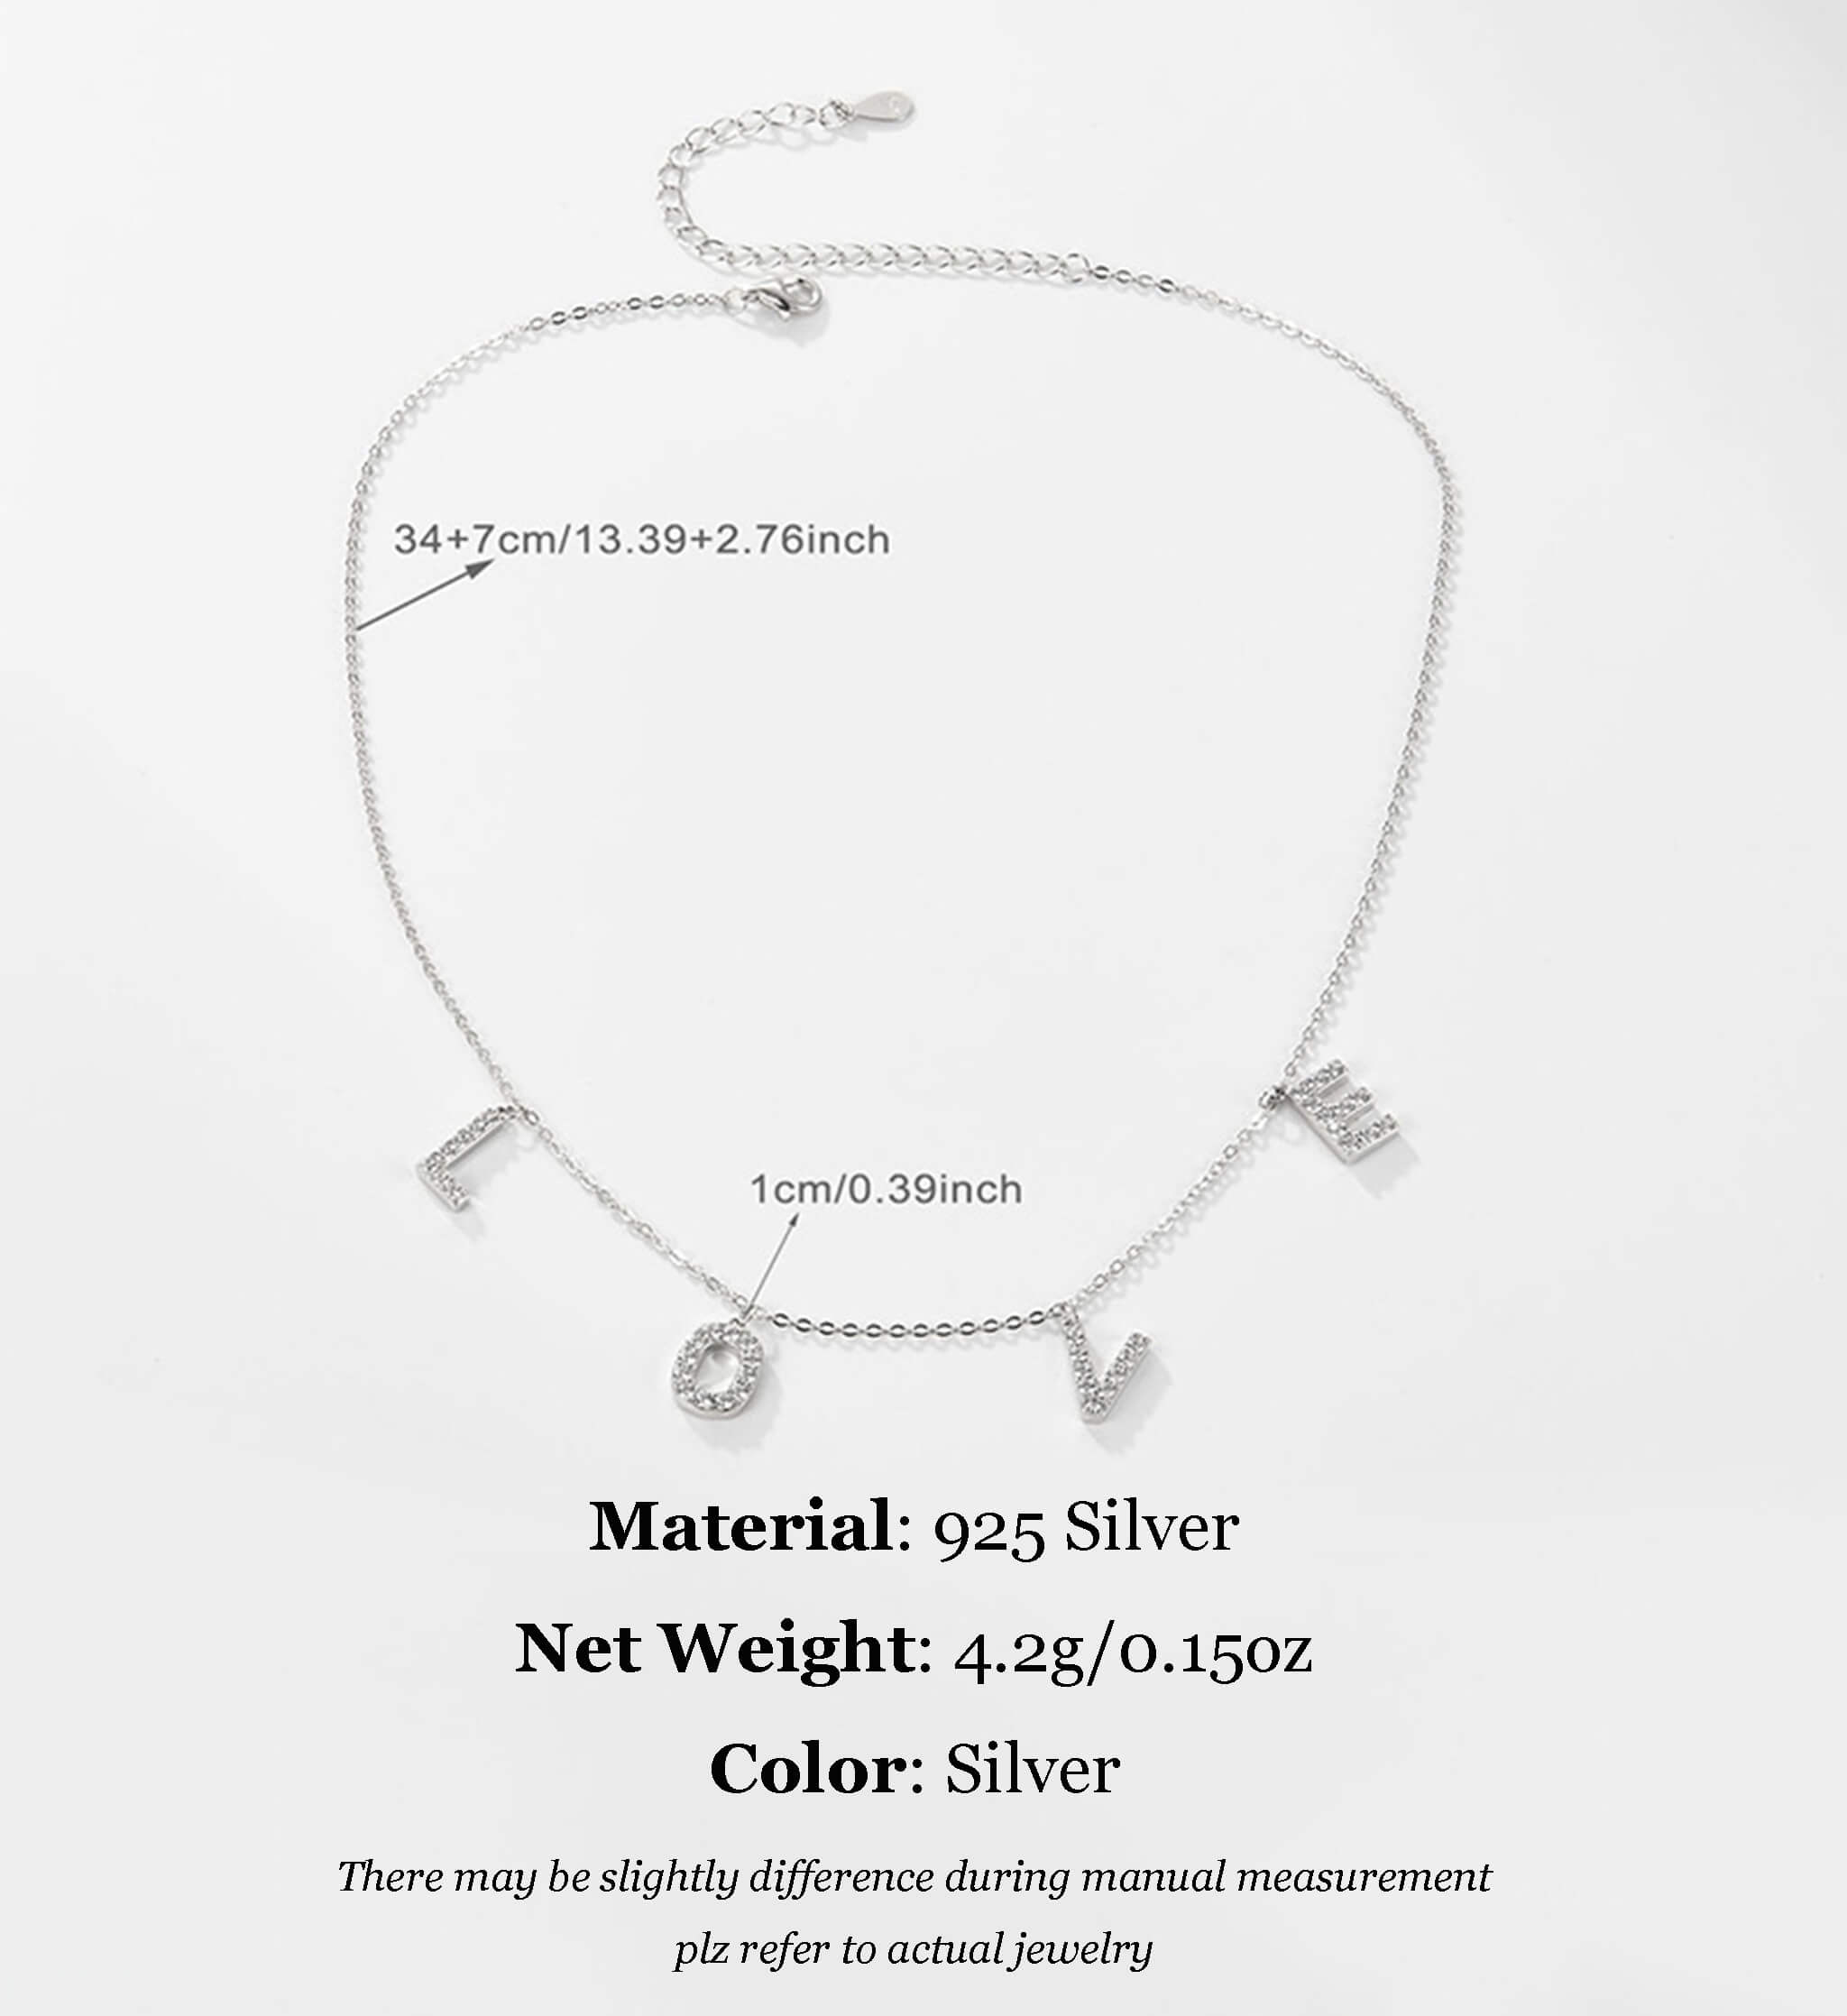 Minimalist S925 Silver LOVE Pendant Necklace and Bracelet Set with Inlaid Rhinestone  UponBasics   